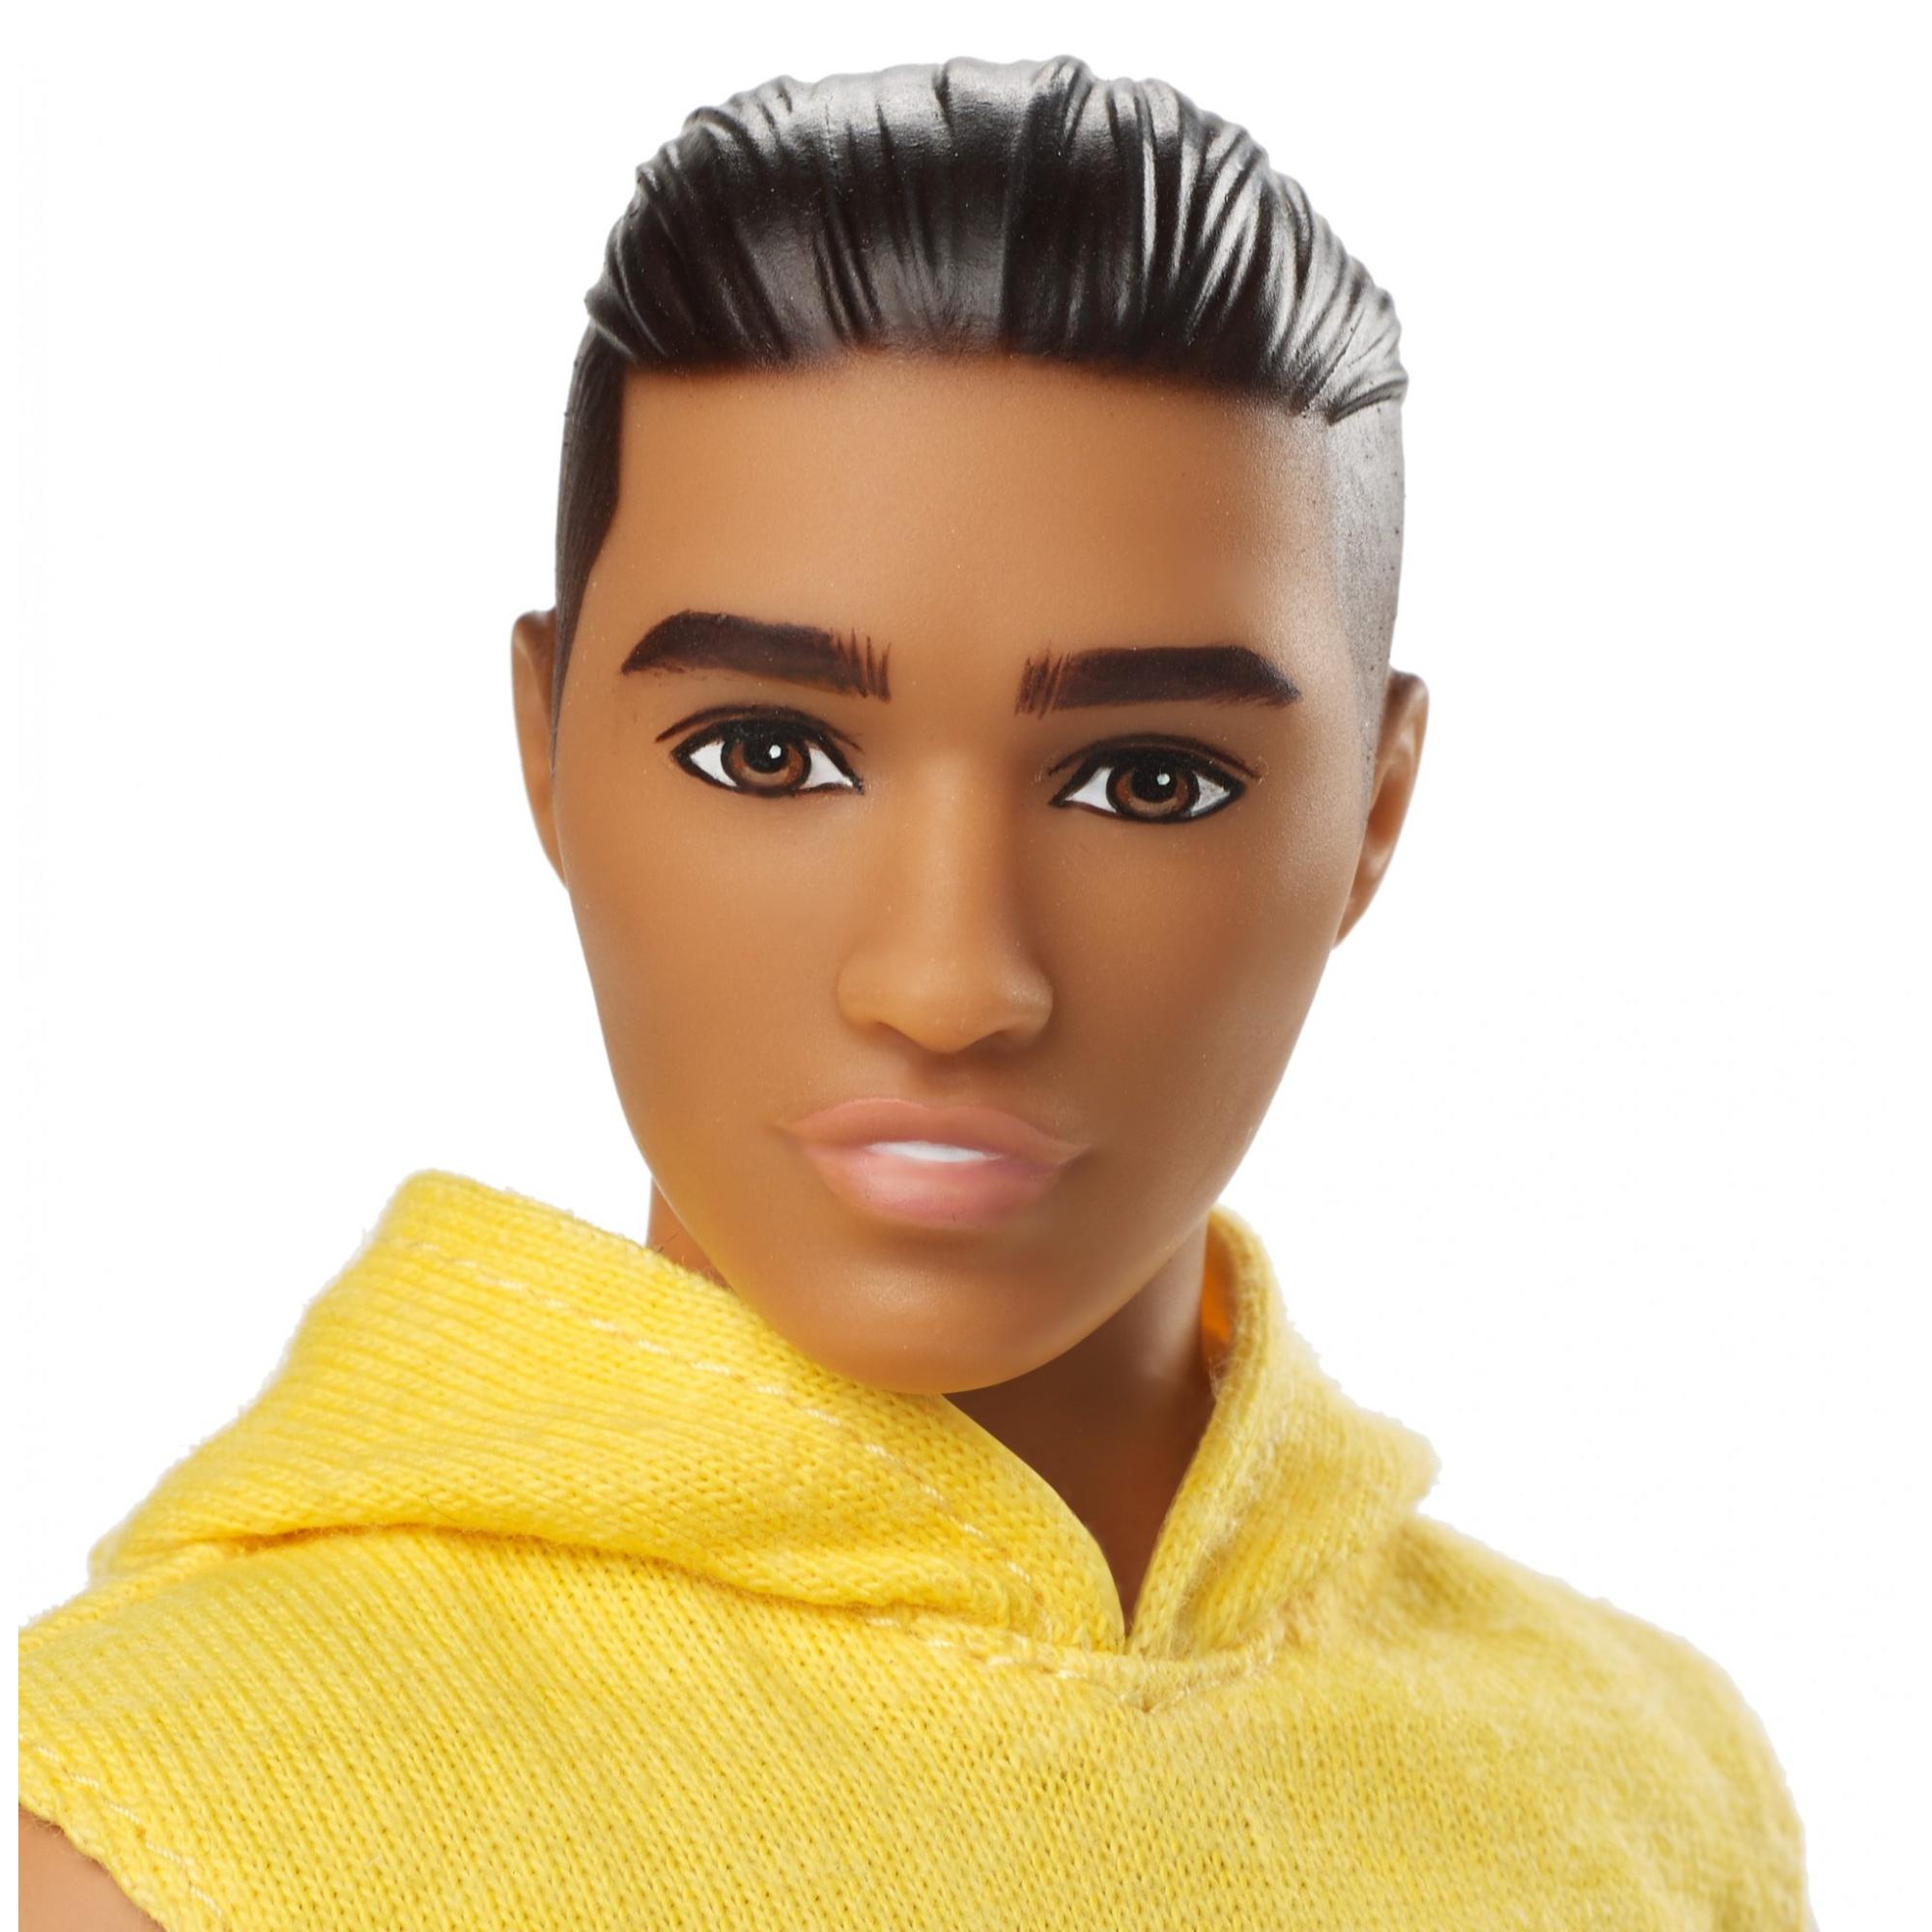 Barbie Ken Fashionistas Doll Wearing Yellow "New York" Hoodie - image 3 of 6